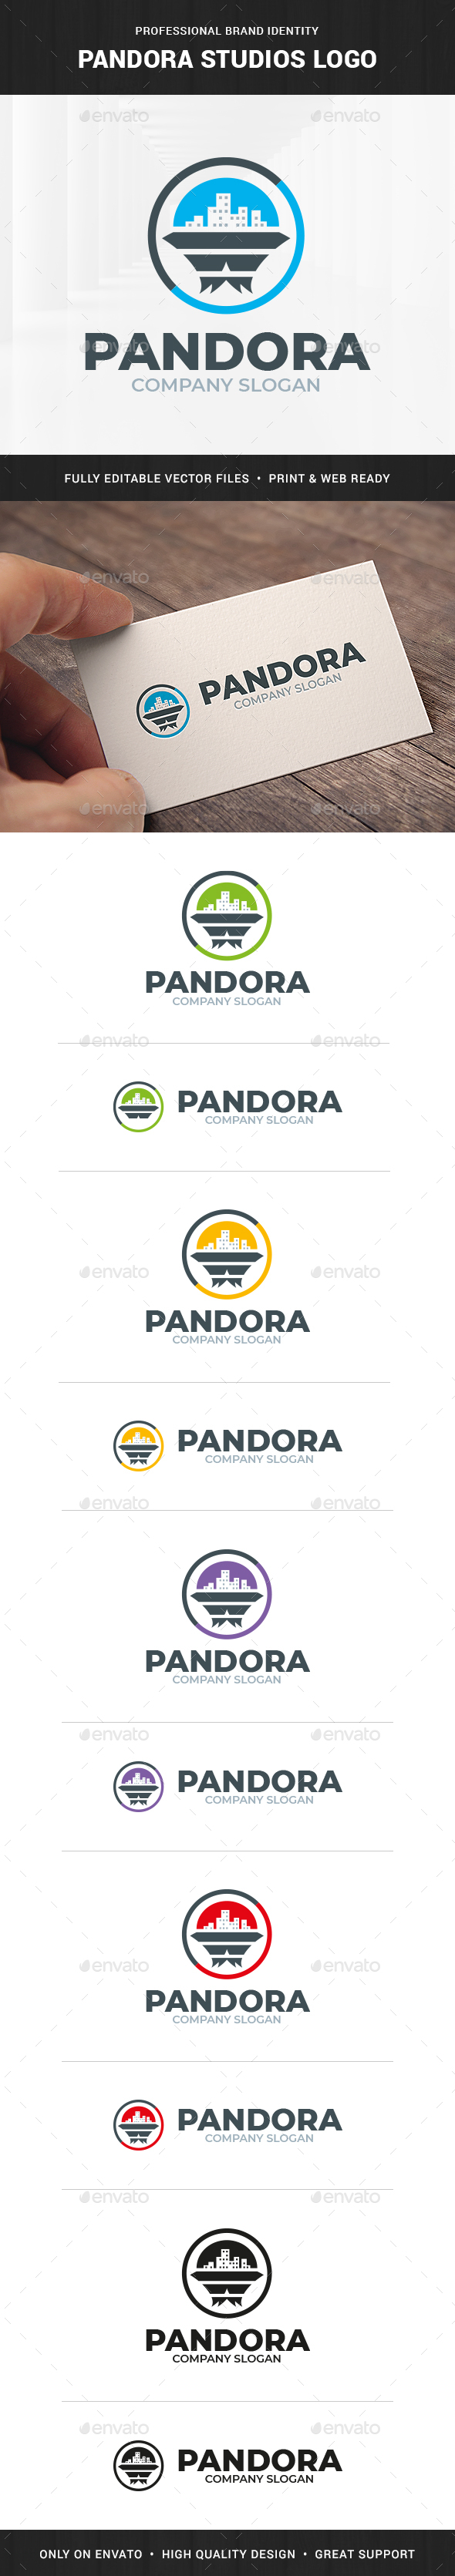 Pandora Studios Logo